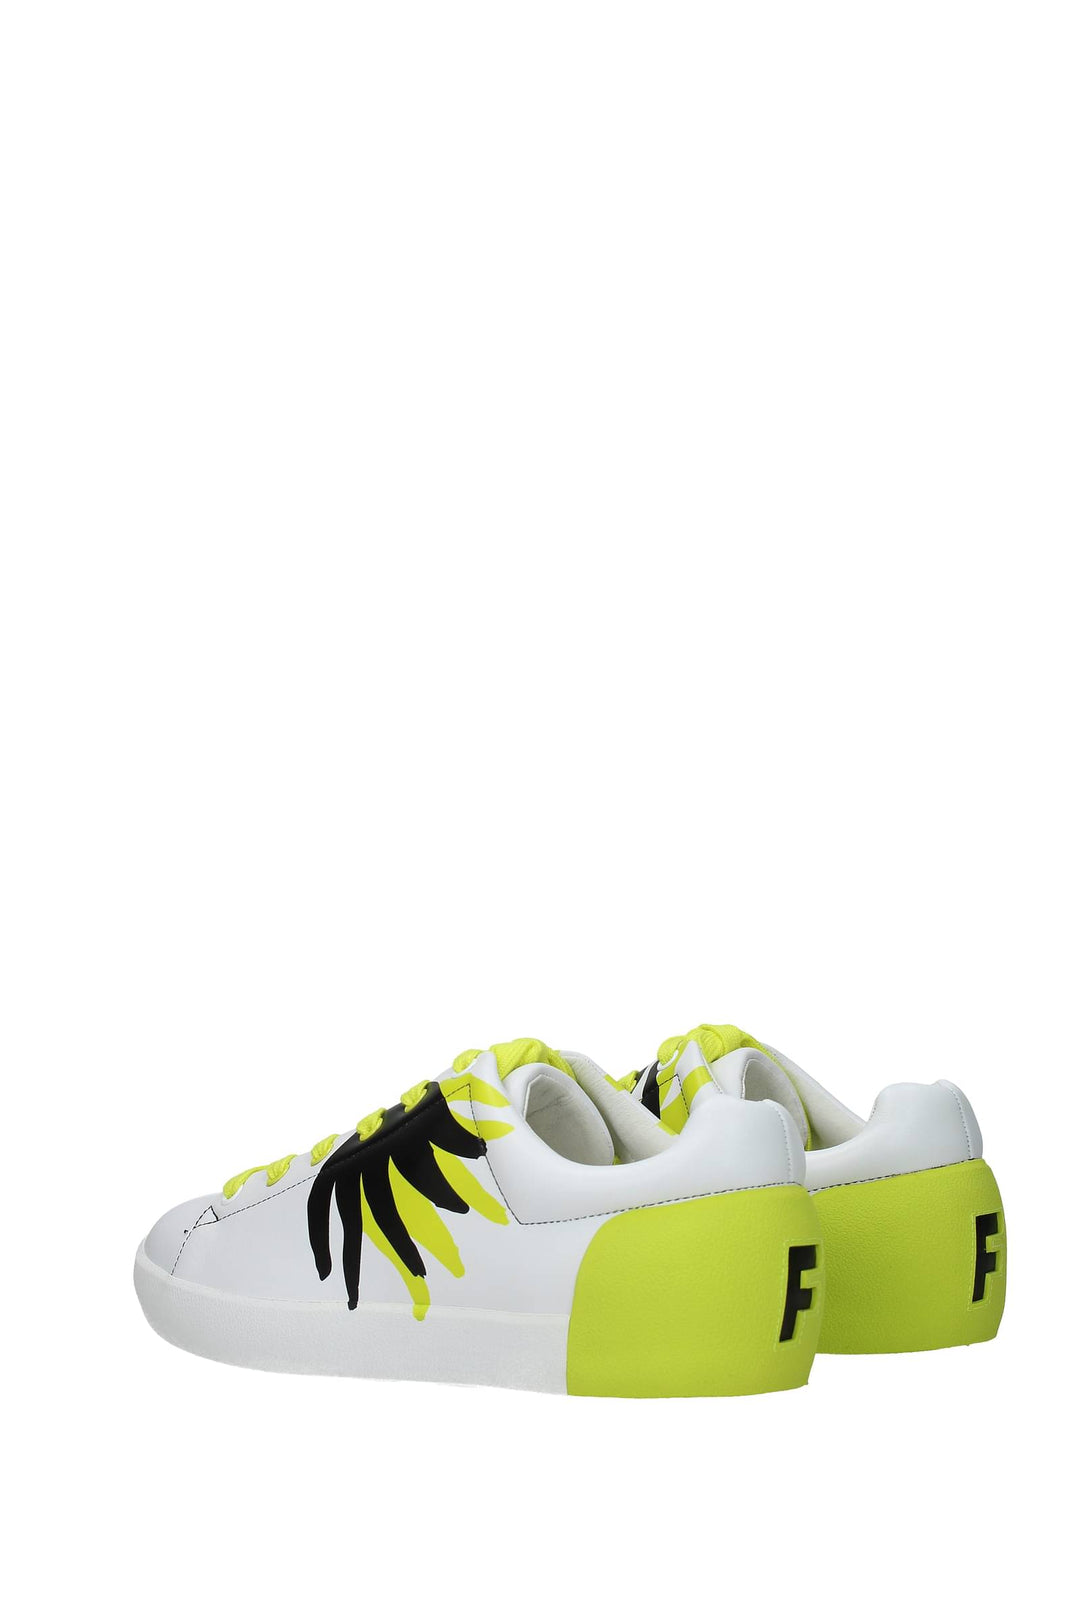 Sneakers X Filip Pagowski Pelle Bianco Lime - Ash - Uomo